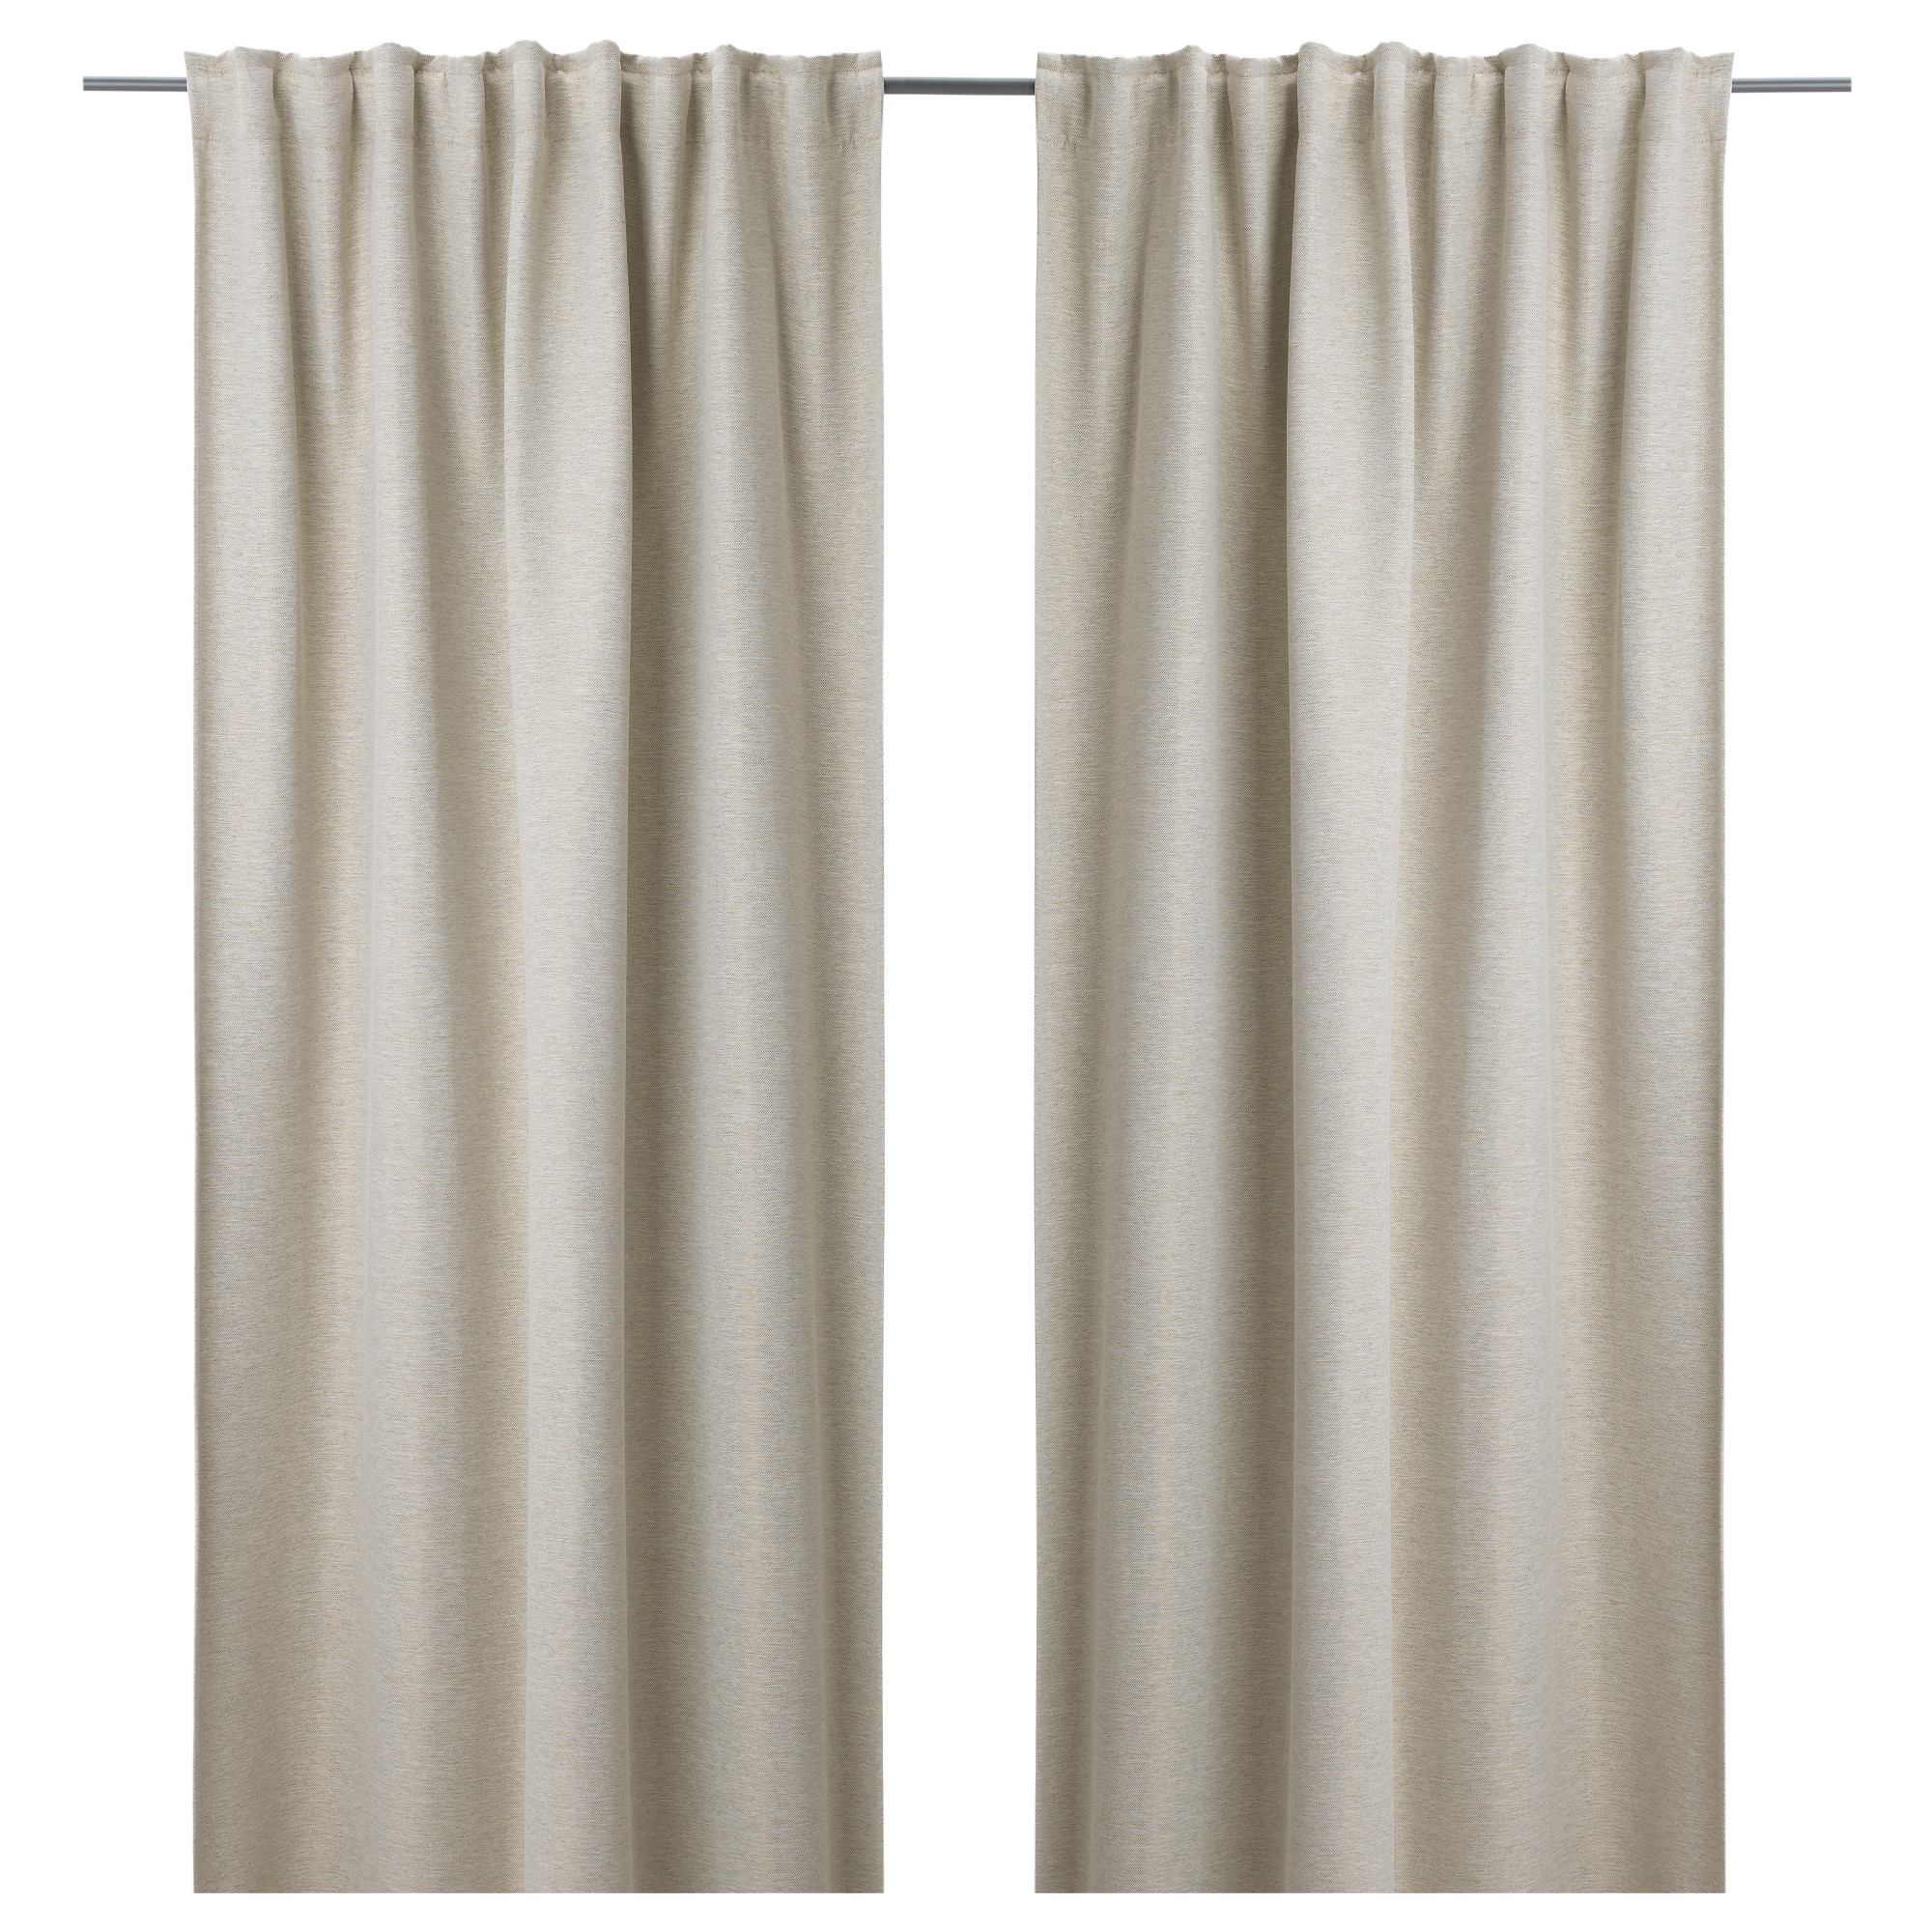 KALAMONDIN room darkening curtains, 1 pair